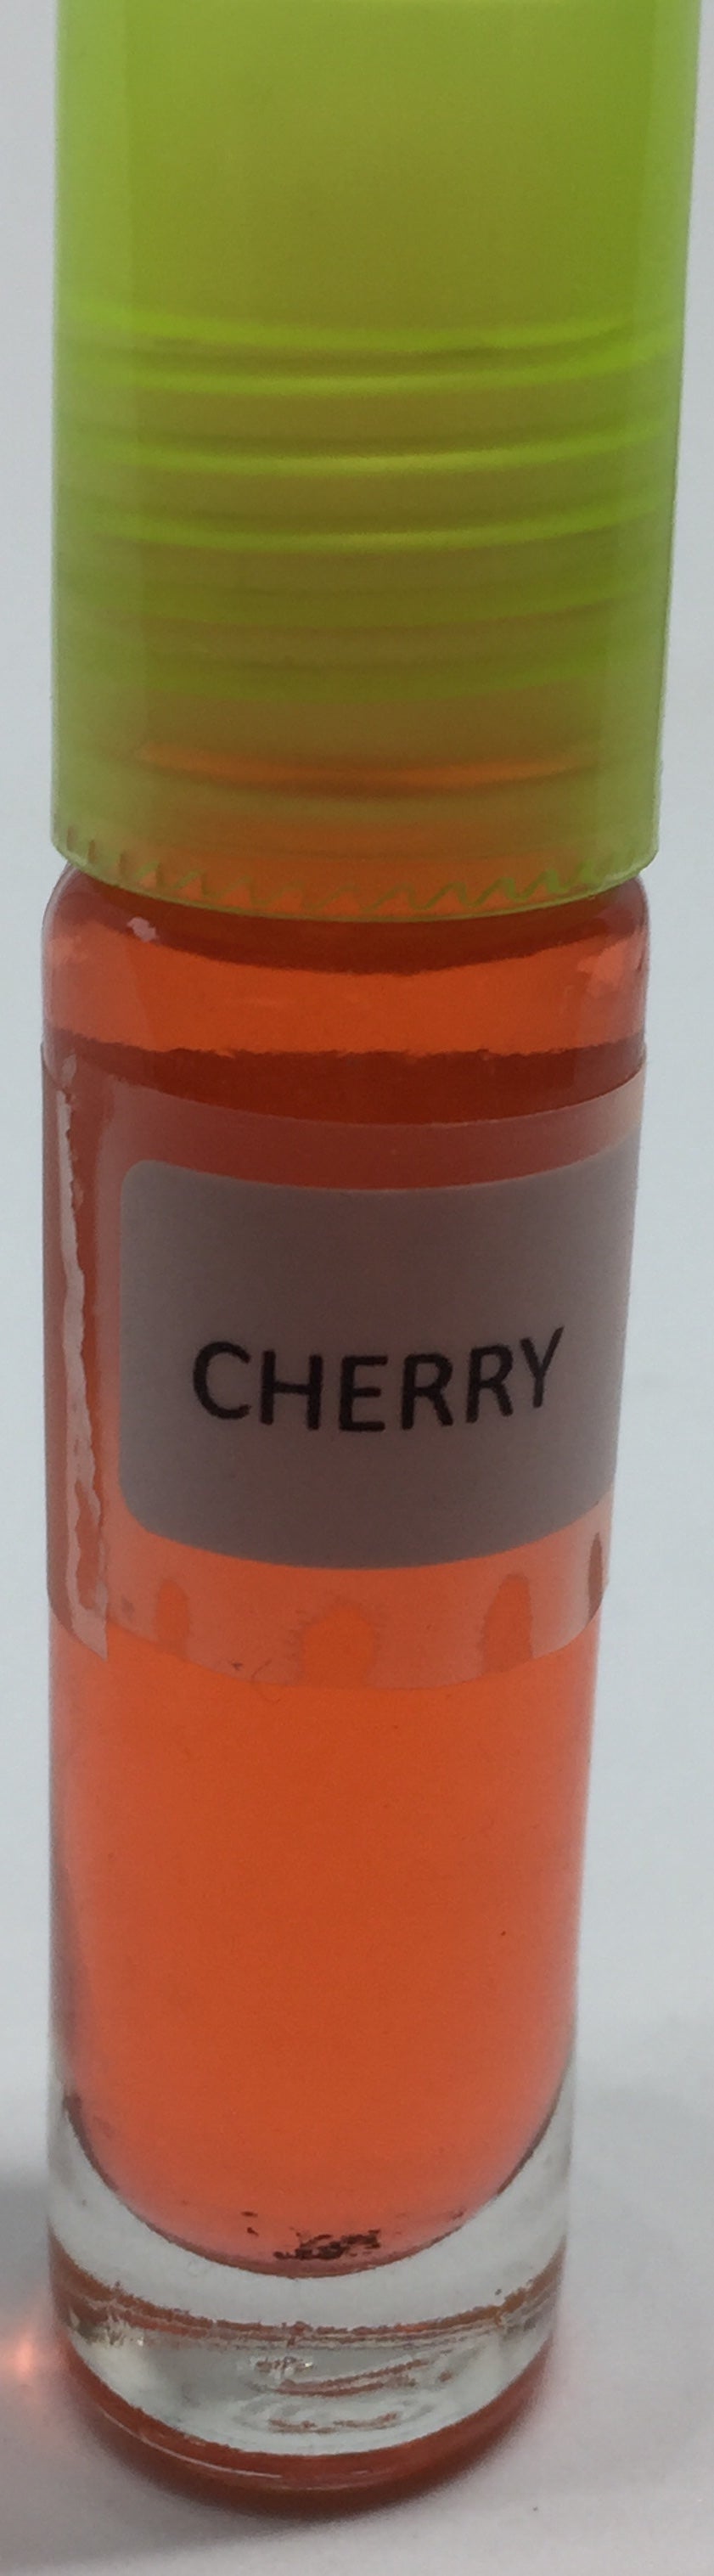 Cherry: Fragrance(Perfume)Body Oil Unisex